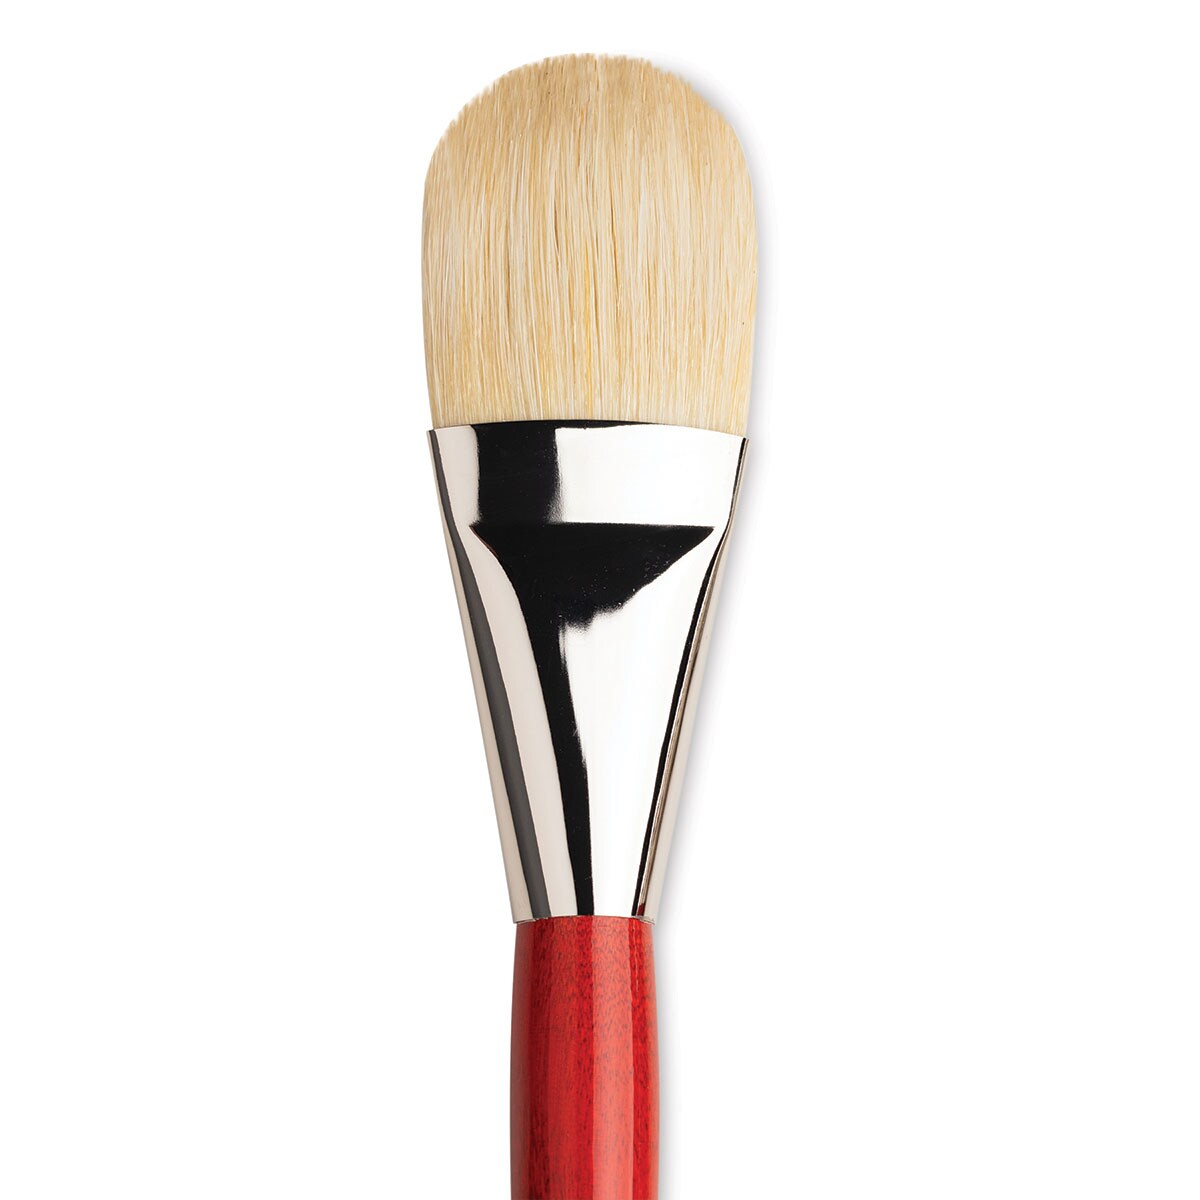 Da Vinci Maestro 2 Hog Bristle Brush - Short Filbert, Long Handle, Size 24